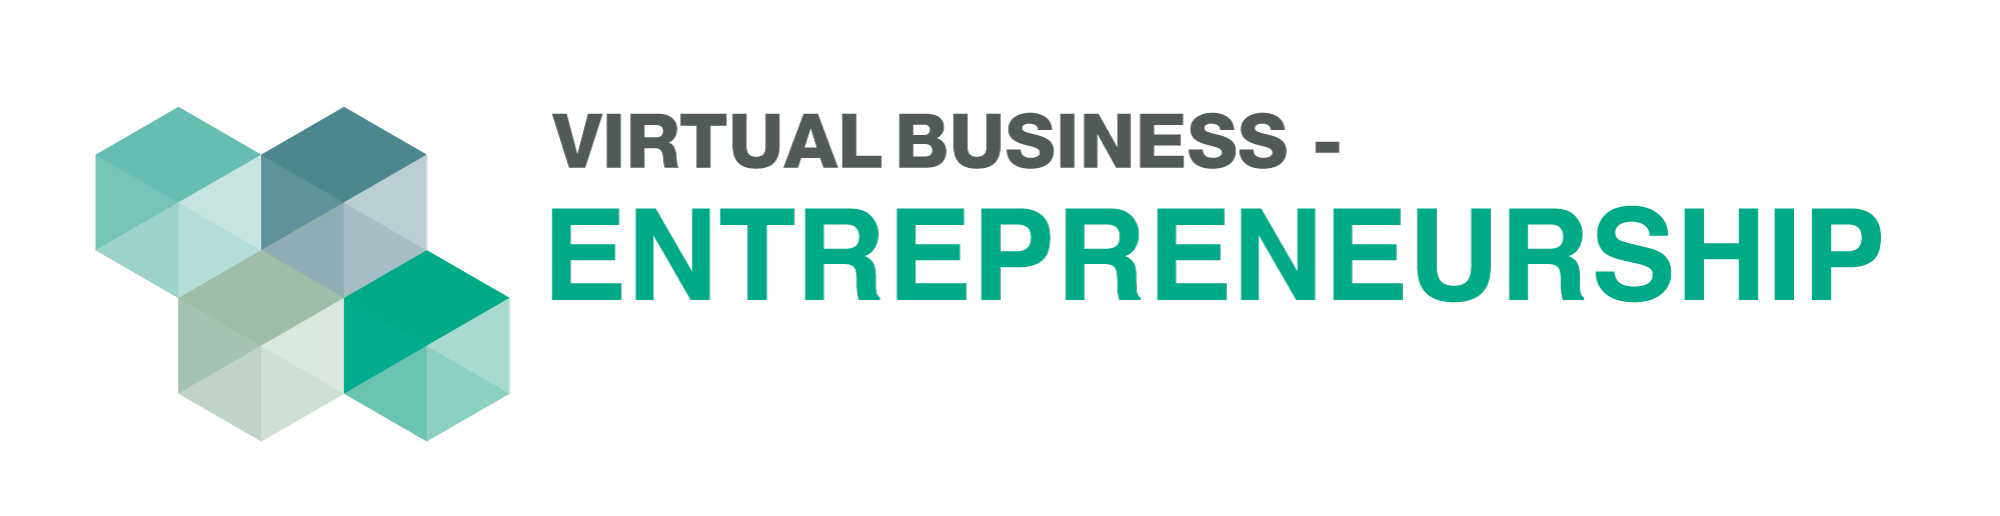 Virtual Business - Entrepreneurship